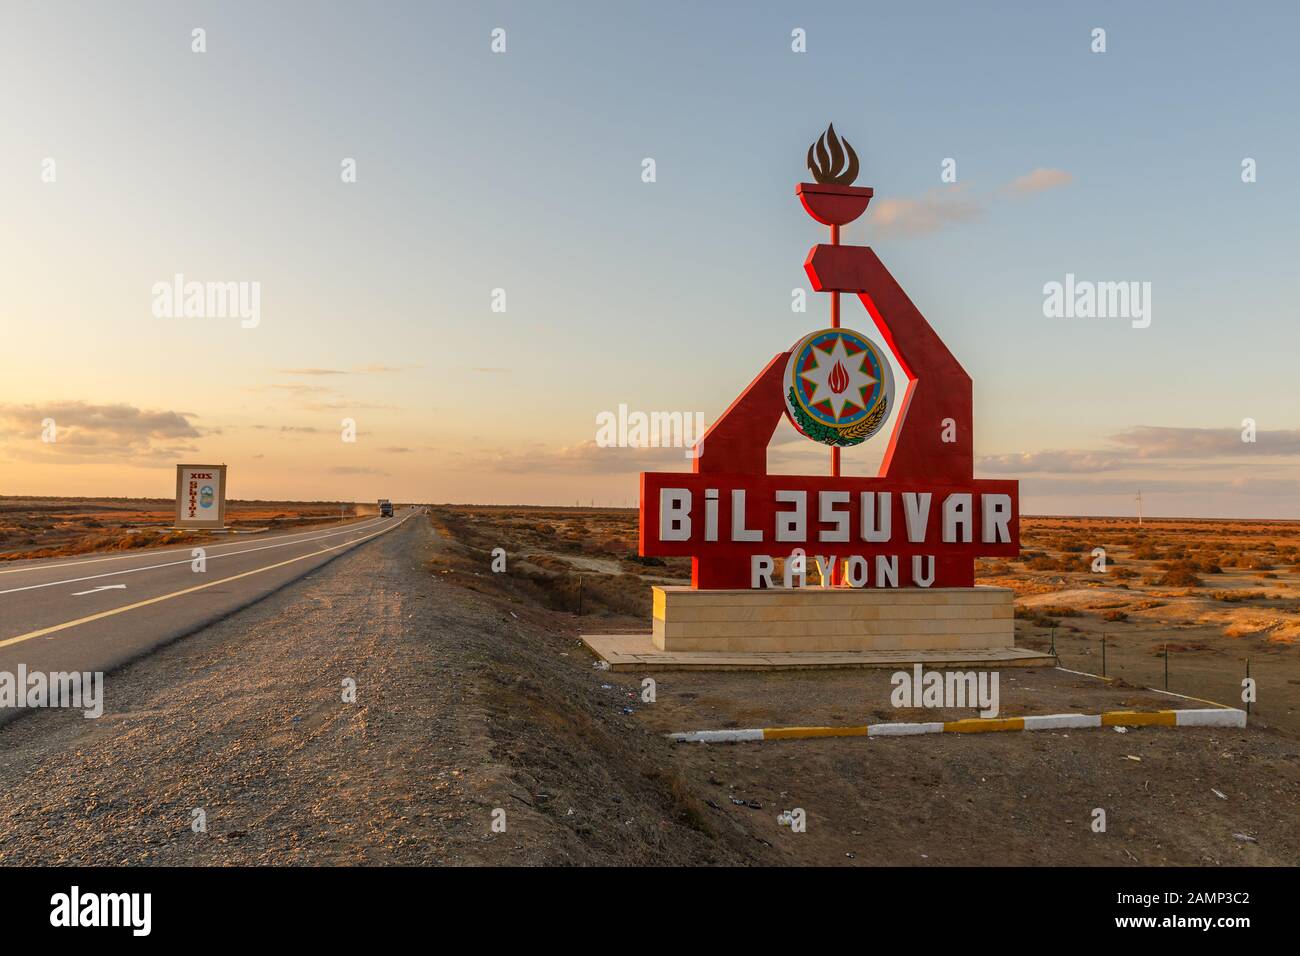 Bilasuvar, Azerbaijan - November 16, 2019: Entrance to the Bilasuvar District. Road sign at the entrance to Bilasuvar Rayon. Azerbaijan. Stock Photo